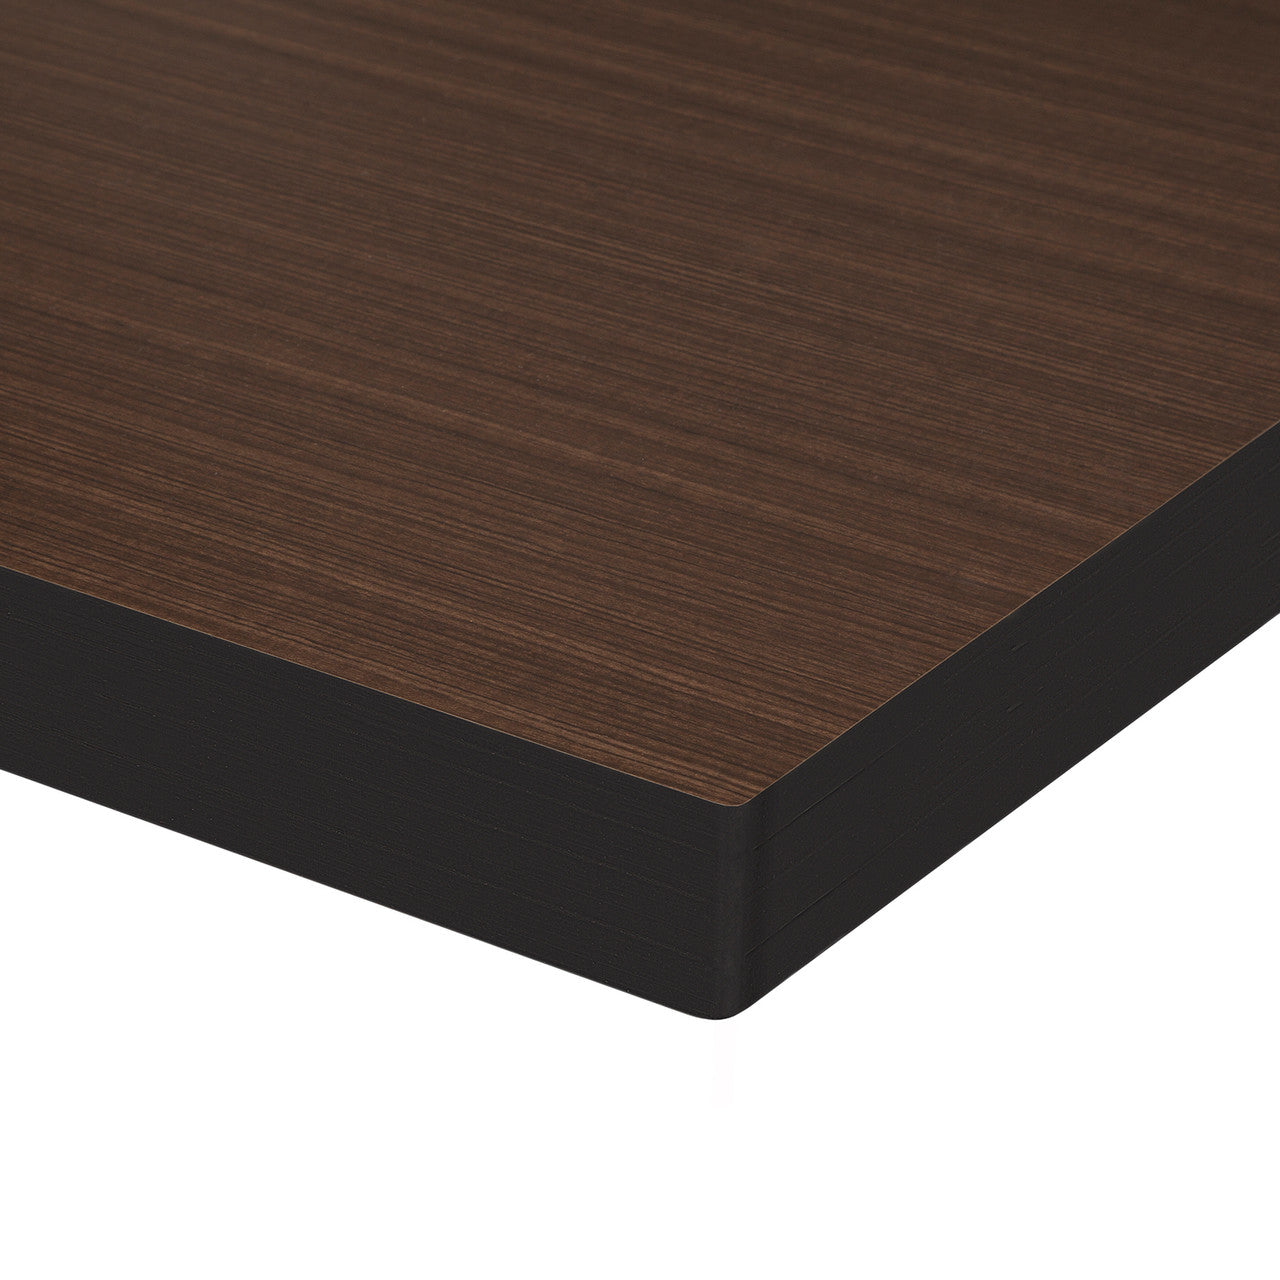 Source Furniture Prime Square Table Top - 42" x 42" , 0.5" edge